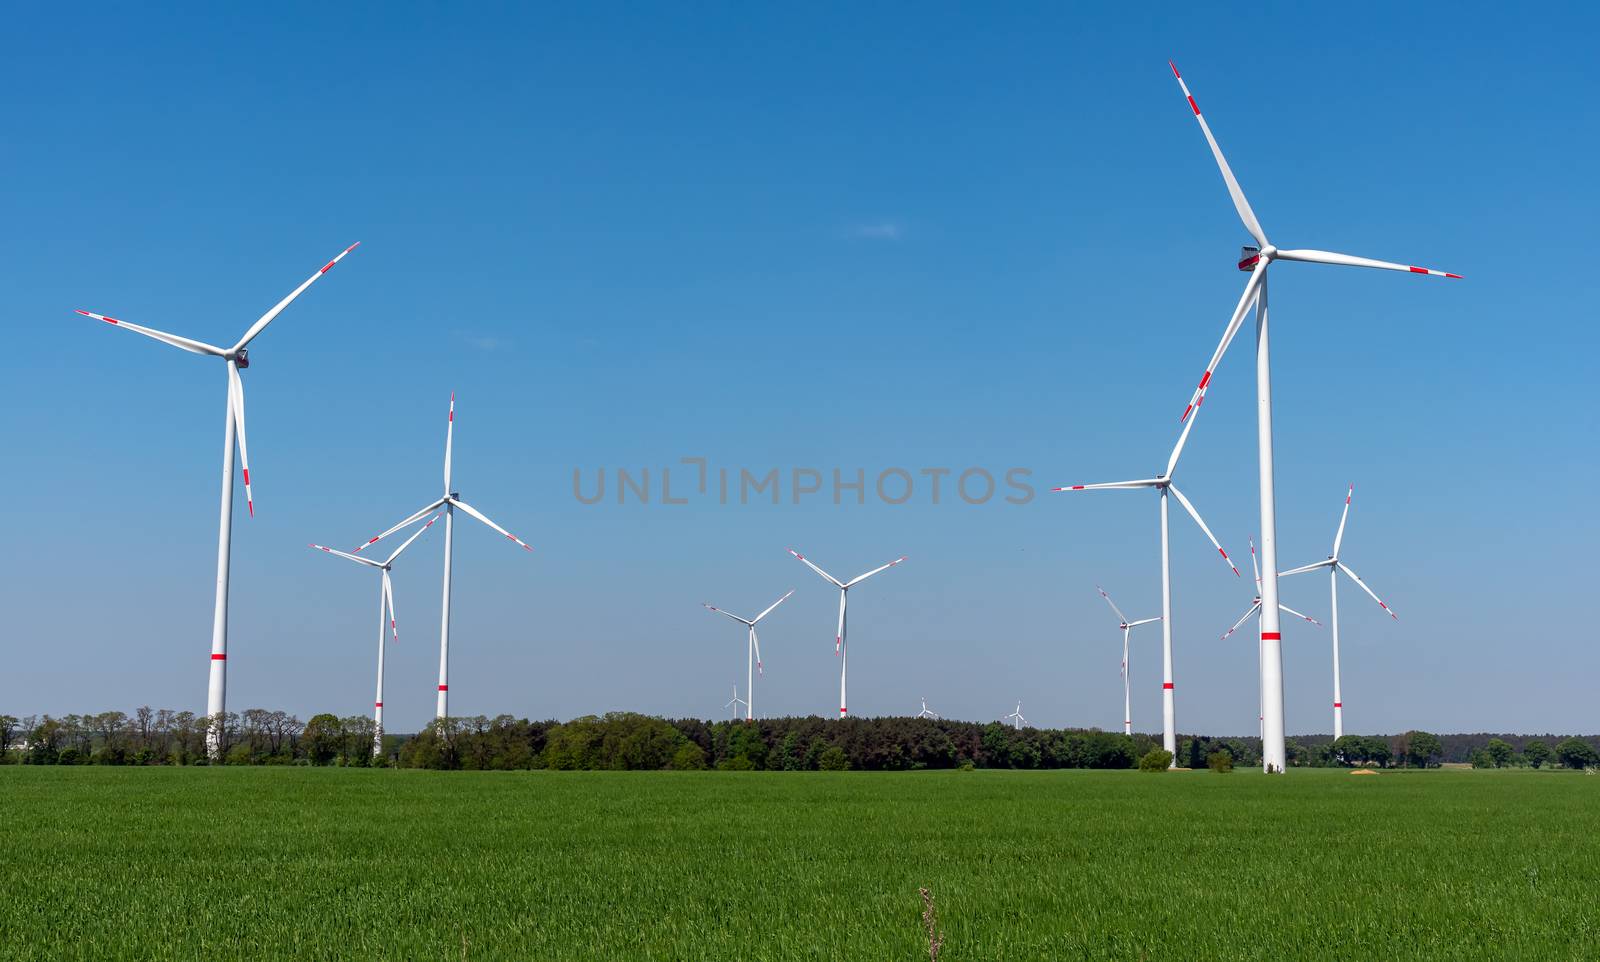 Wind power plants, green fields and blue skies seen in rural Germany